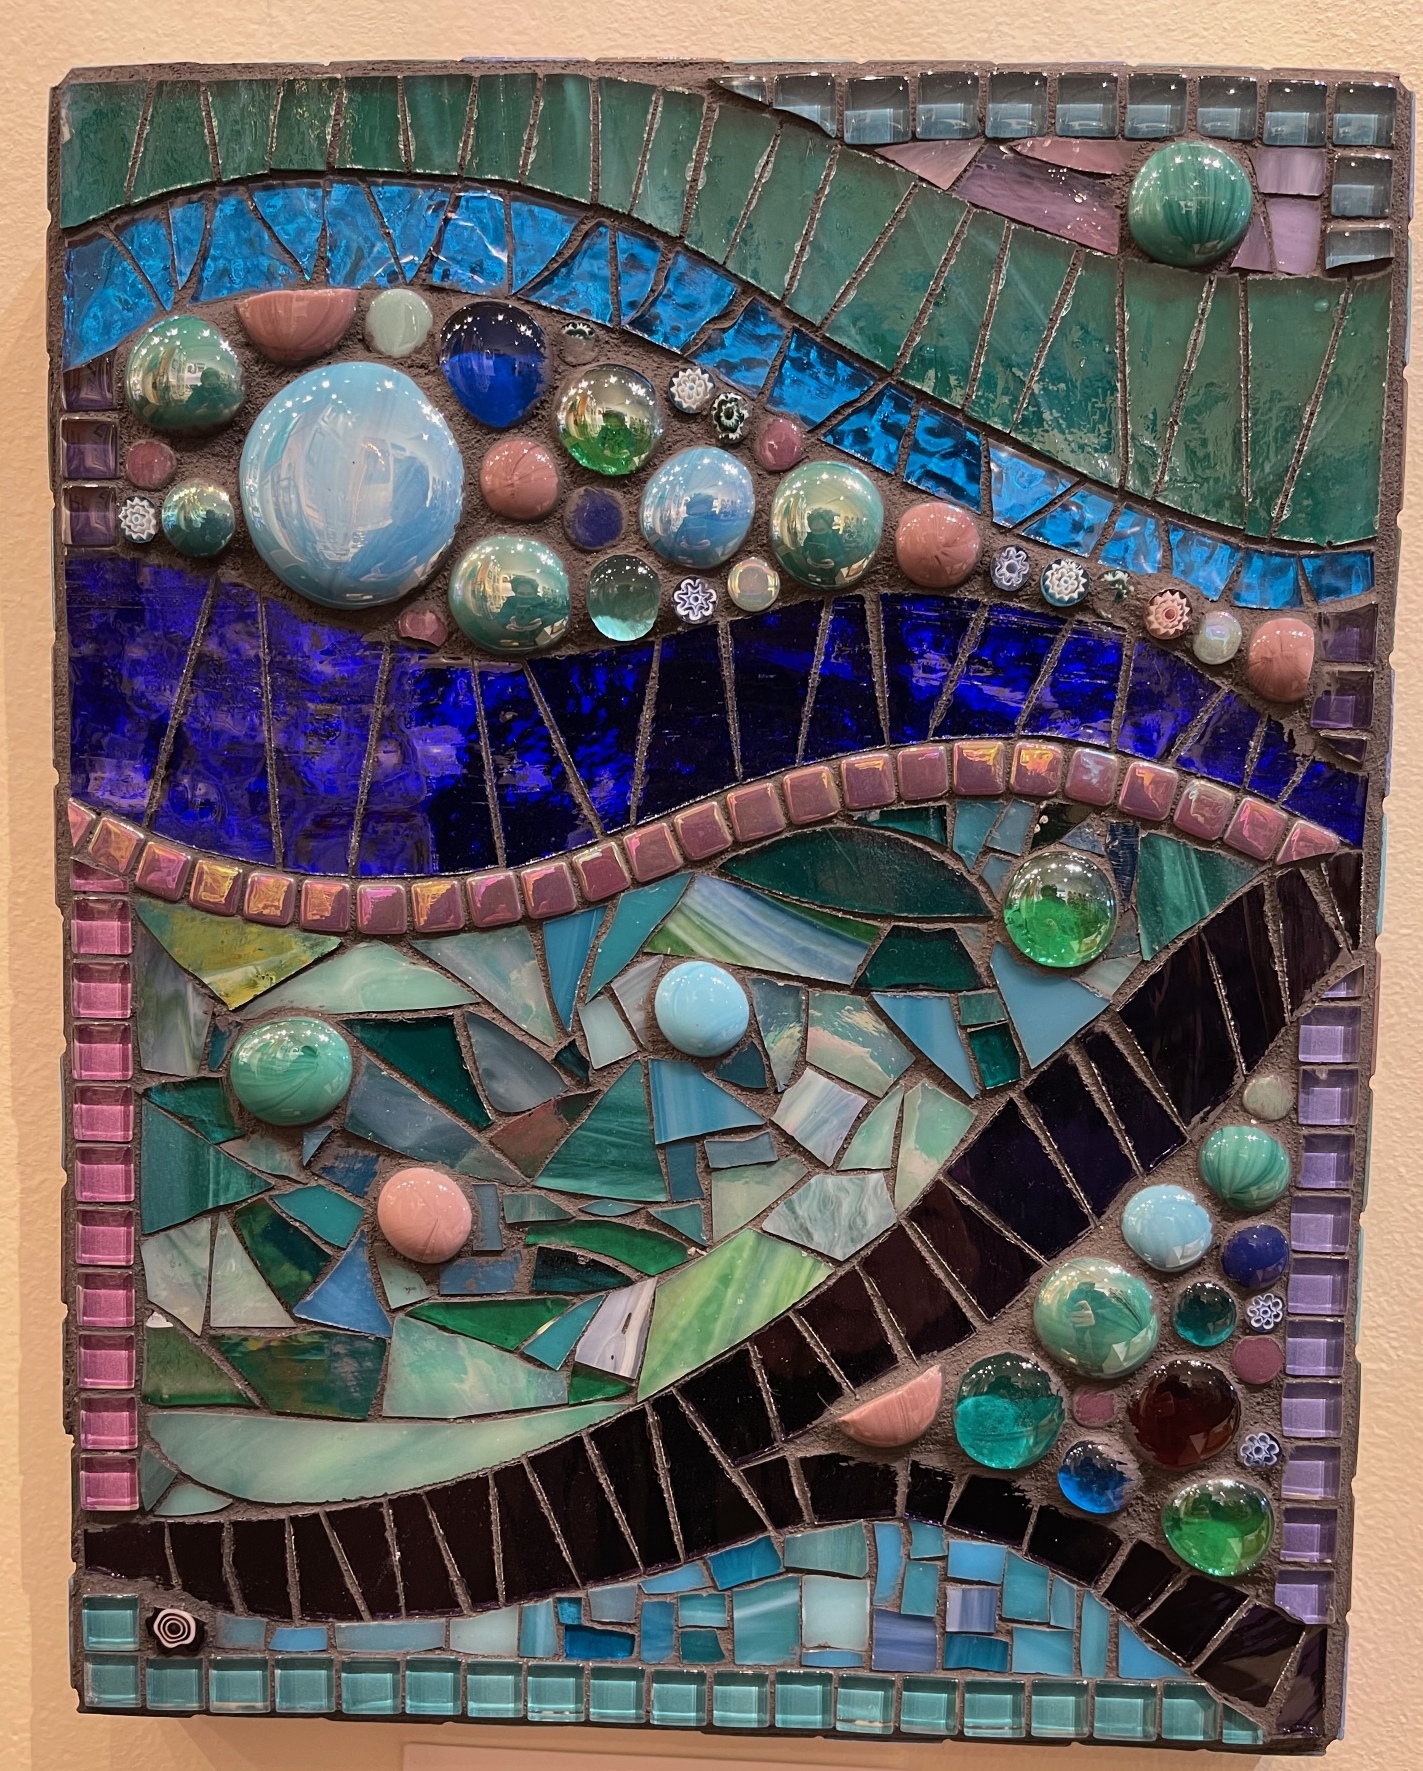 "Bejeweled" jewel-toned glass & ceramic mosaic wall art